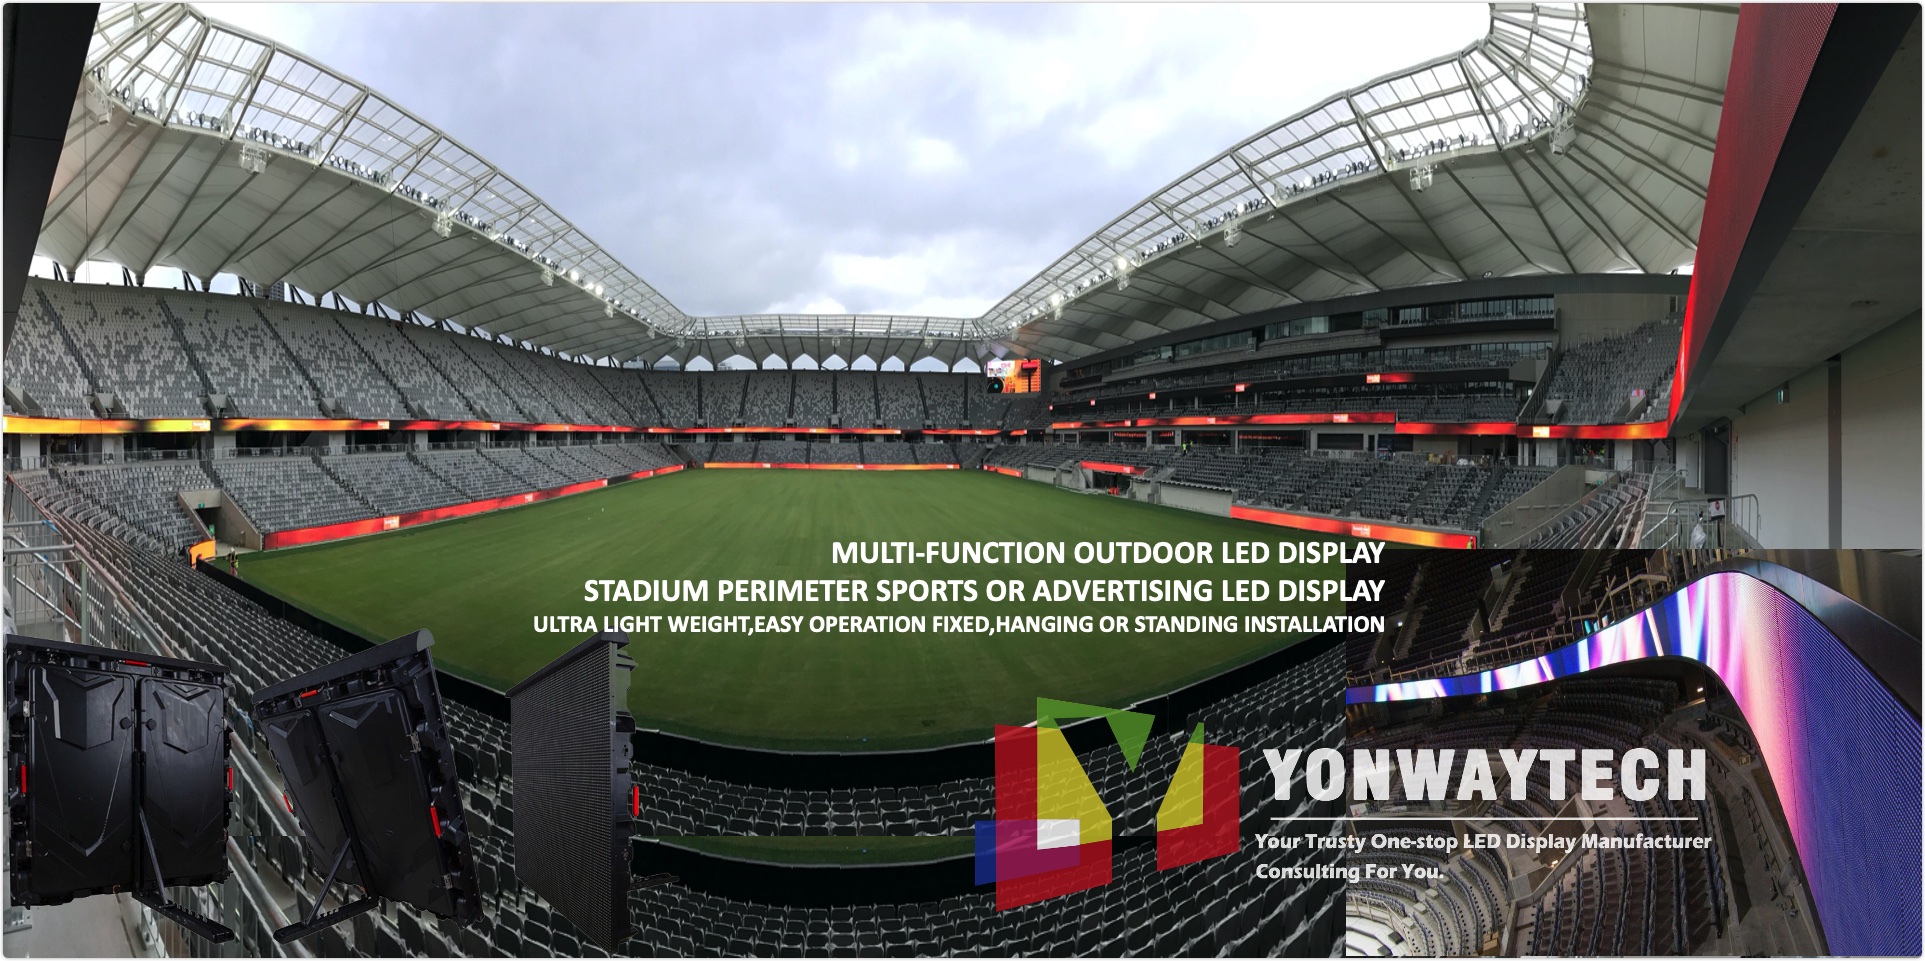 https://www.yonwaytech.com/stadium-perimeter-sport-led-display-screen-product/